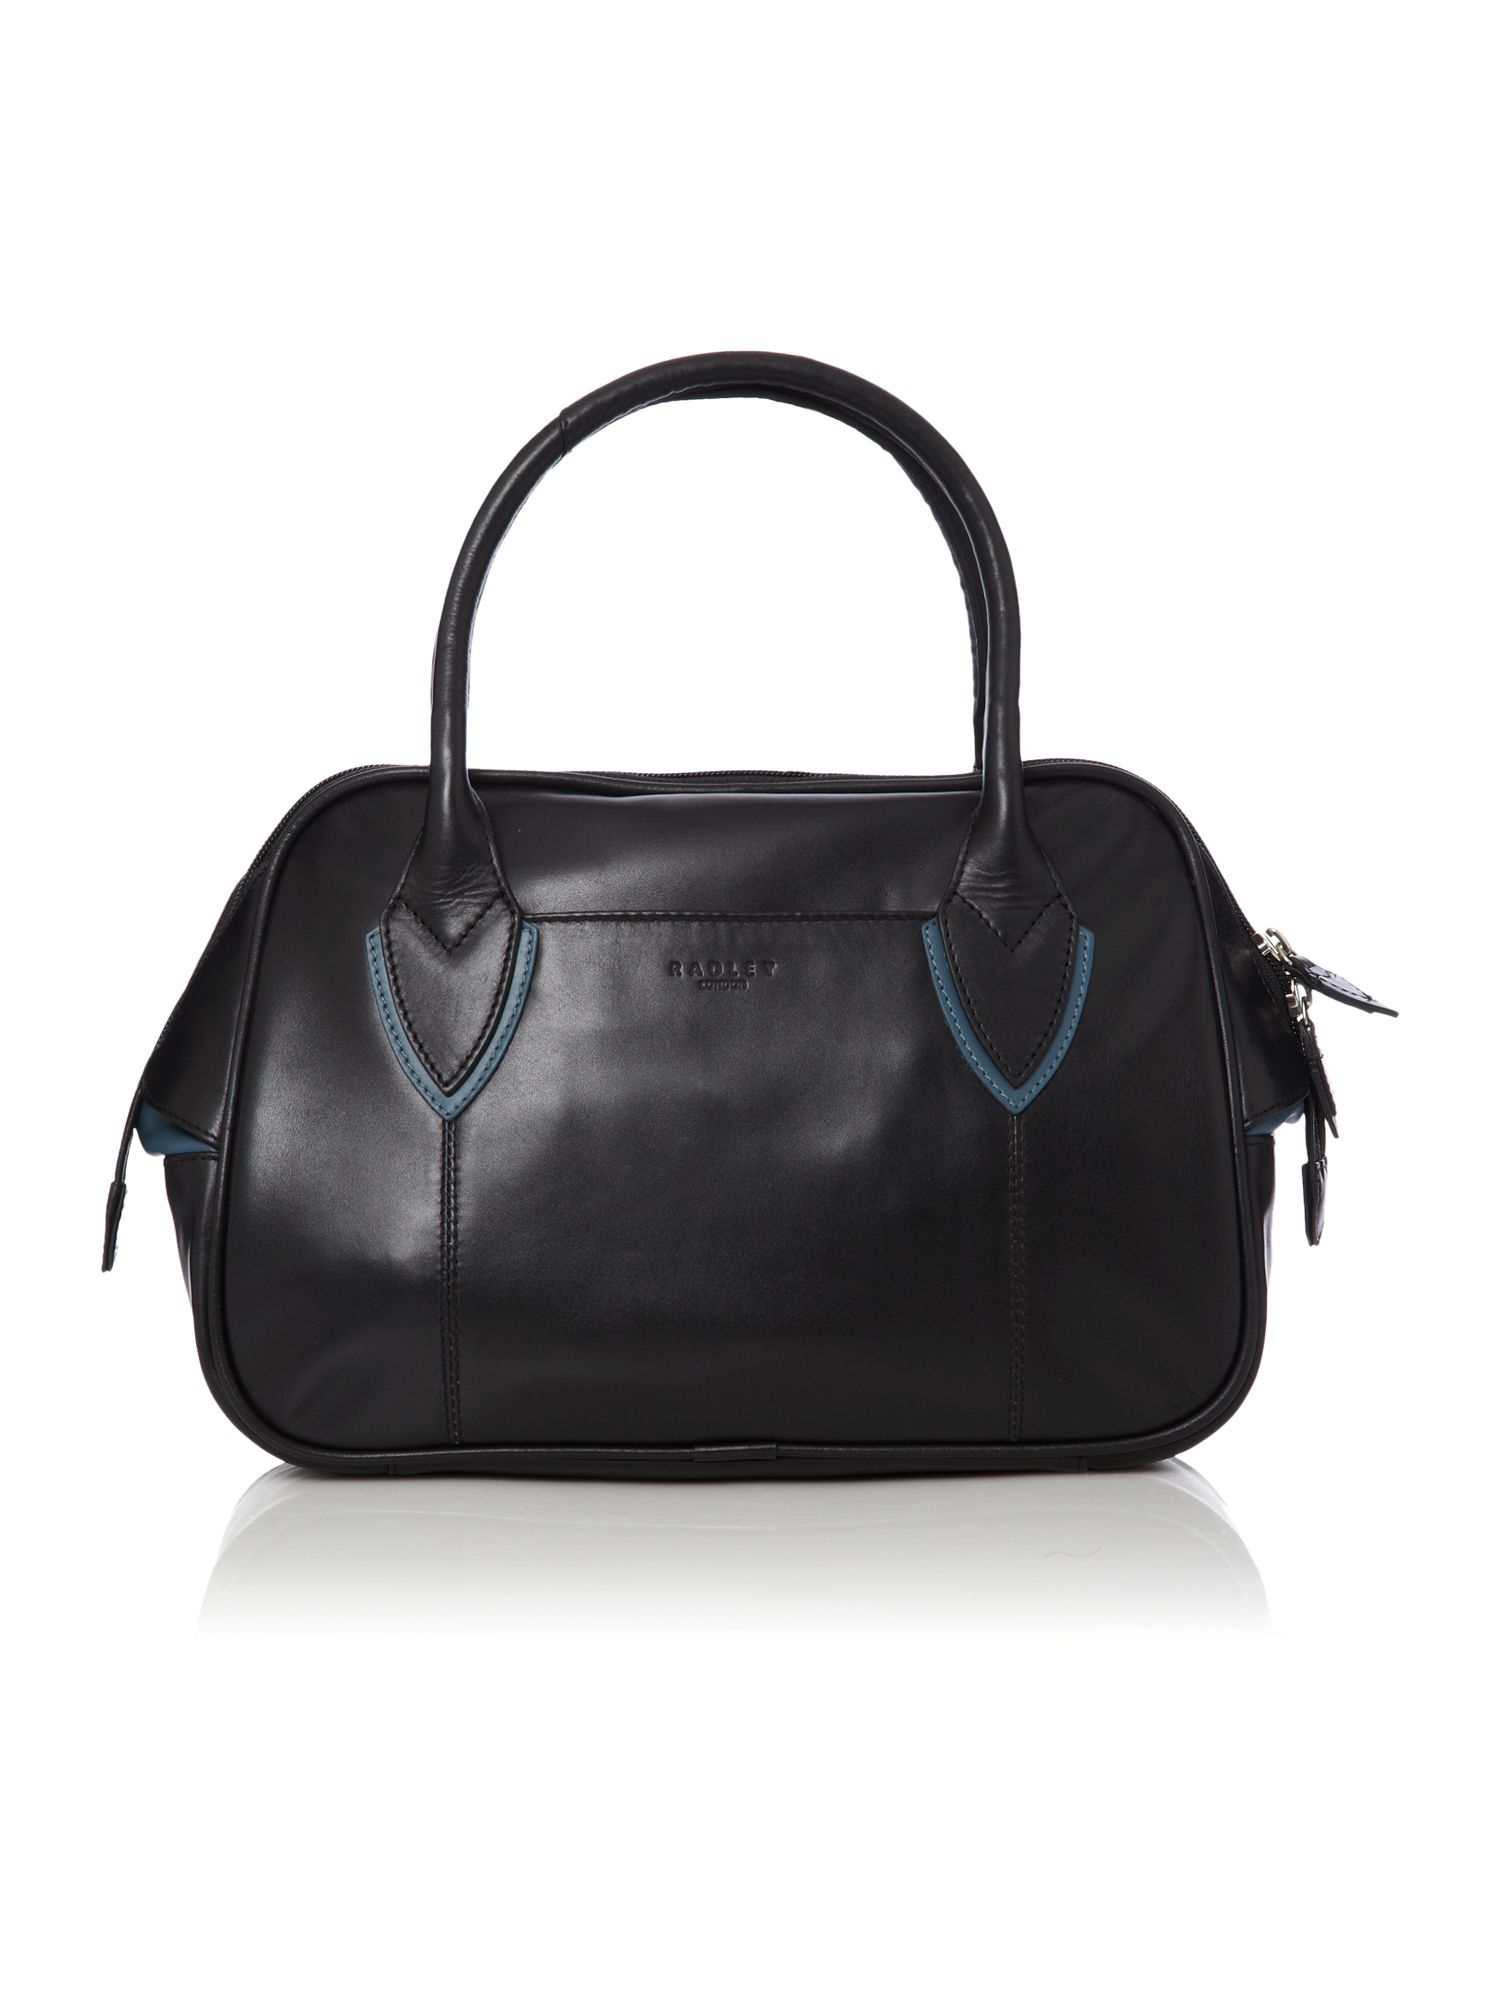 Lyst - Radley Eden Grove Small Grab Bag in Black